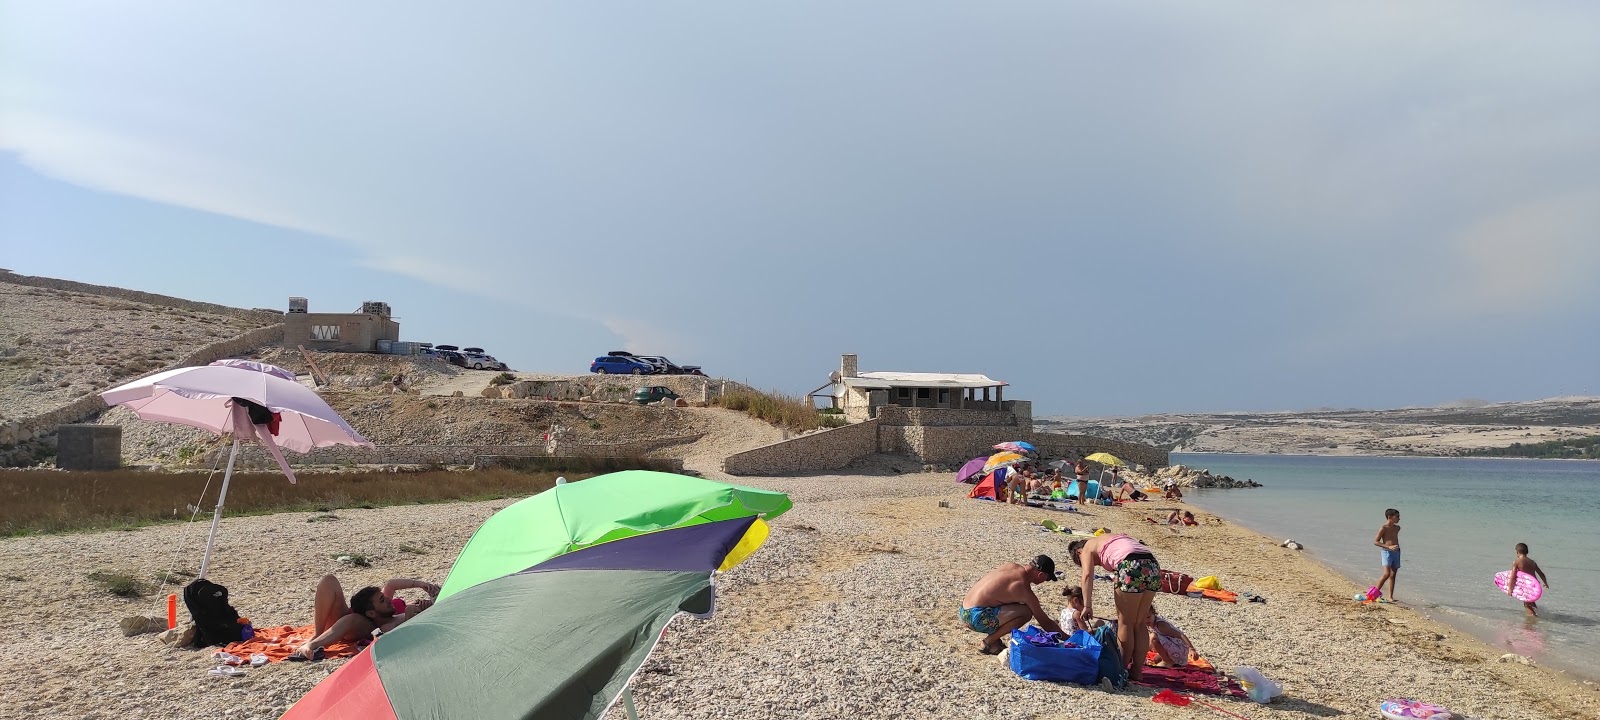 Fotografie cu Prnjica beach - locul popular printre cunoscătorii de relaxare